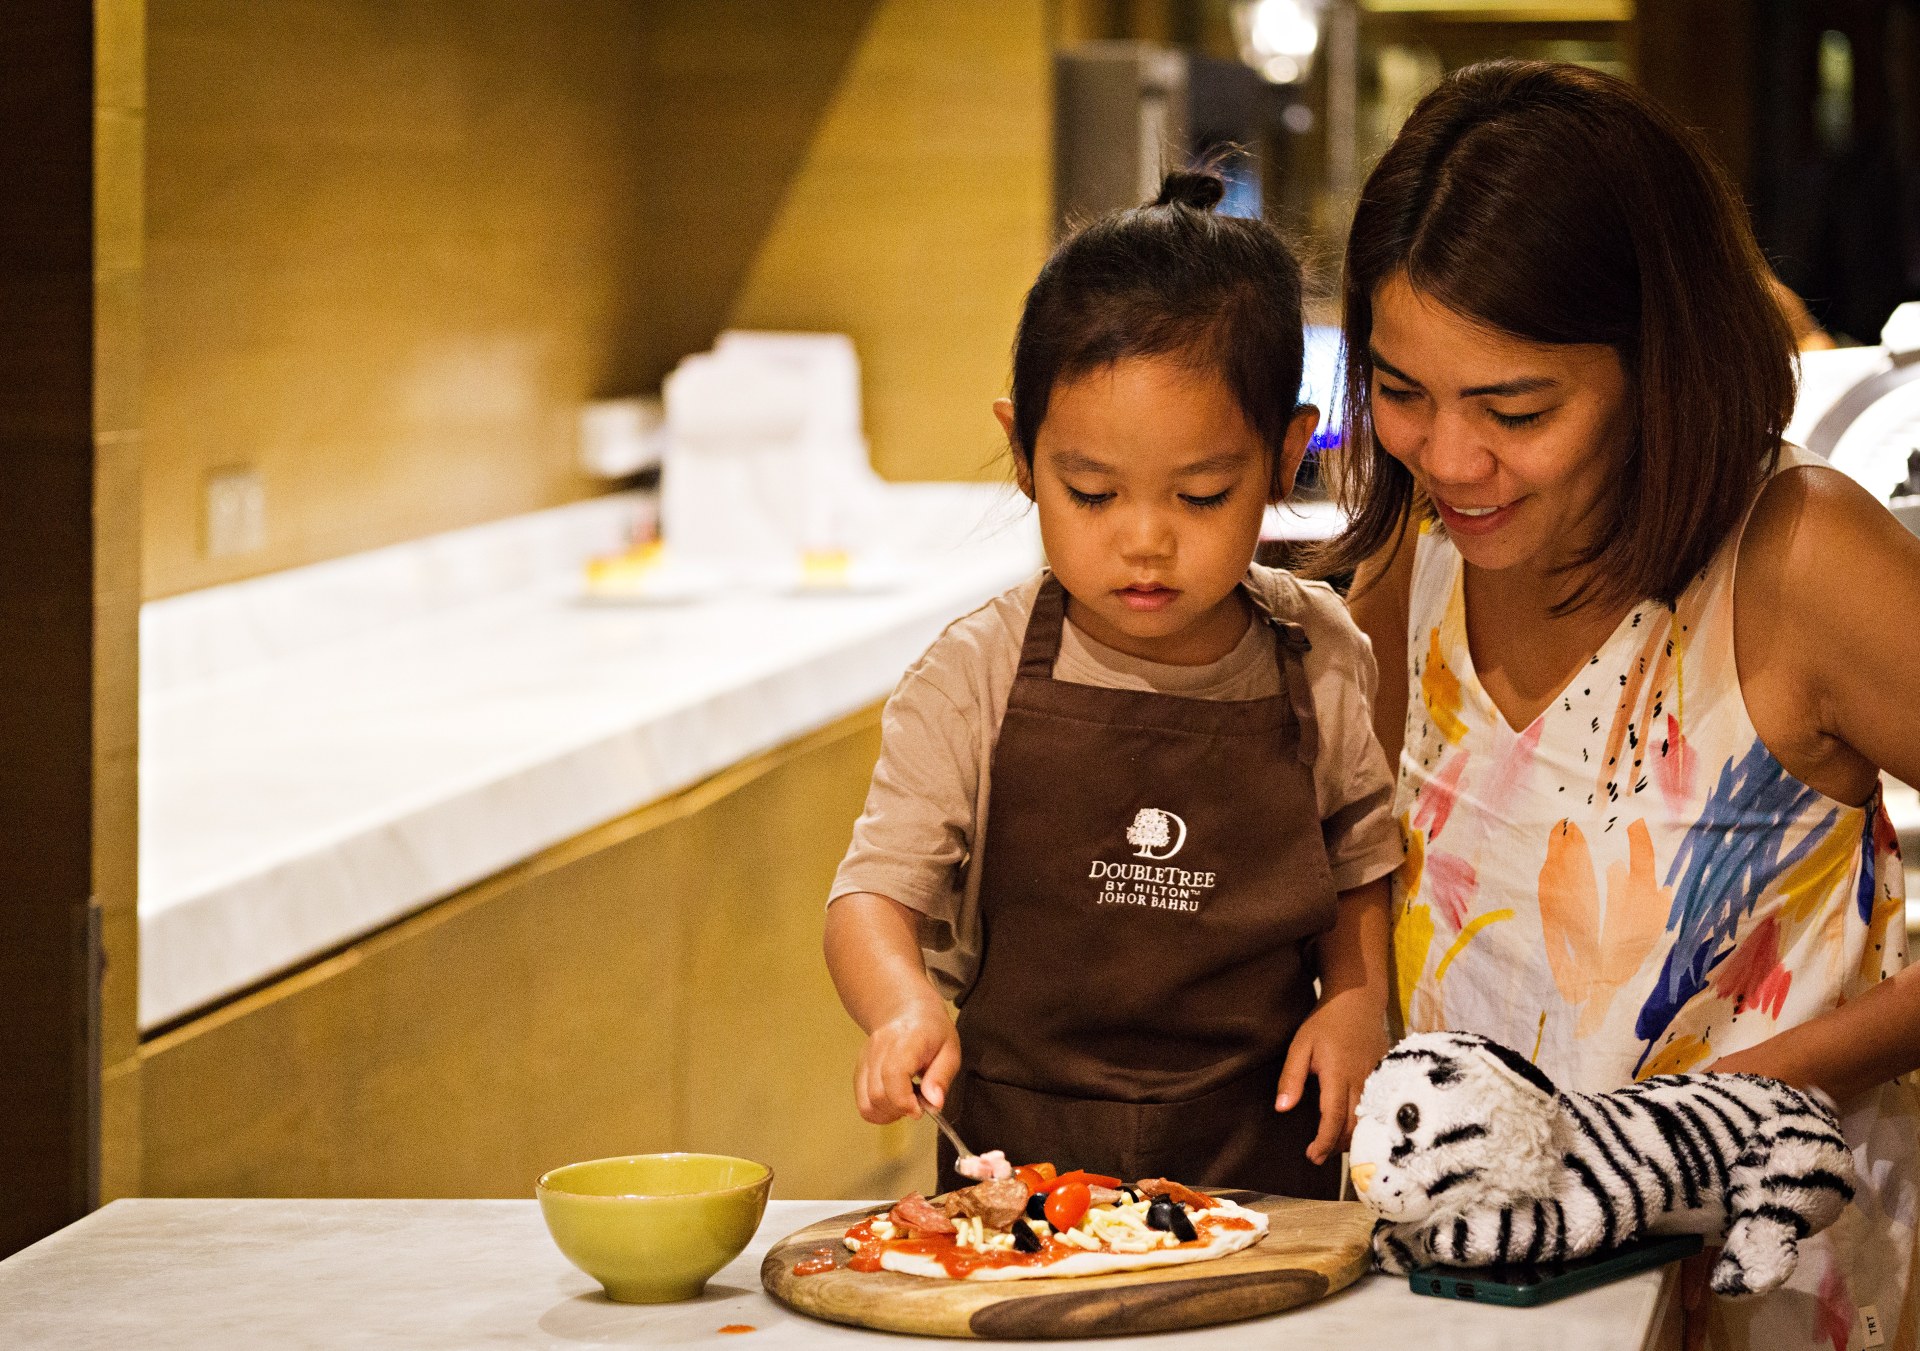 DoubleTree by Hilton Johor Bahru - Little Chefs' Pizza Workshop